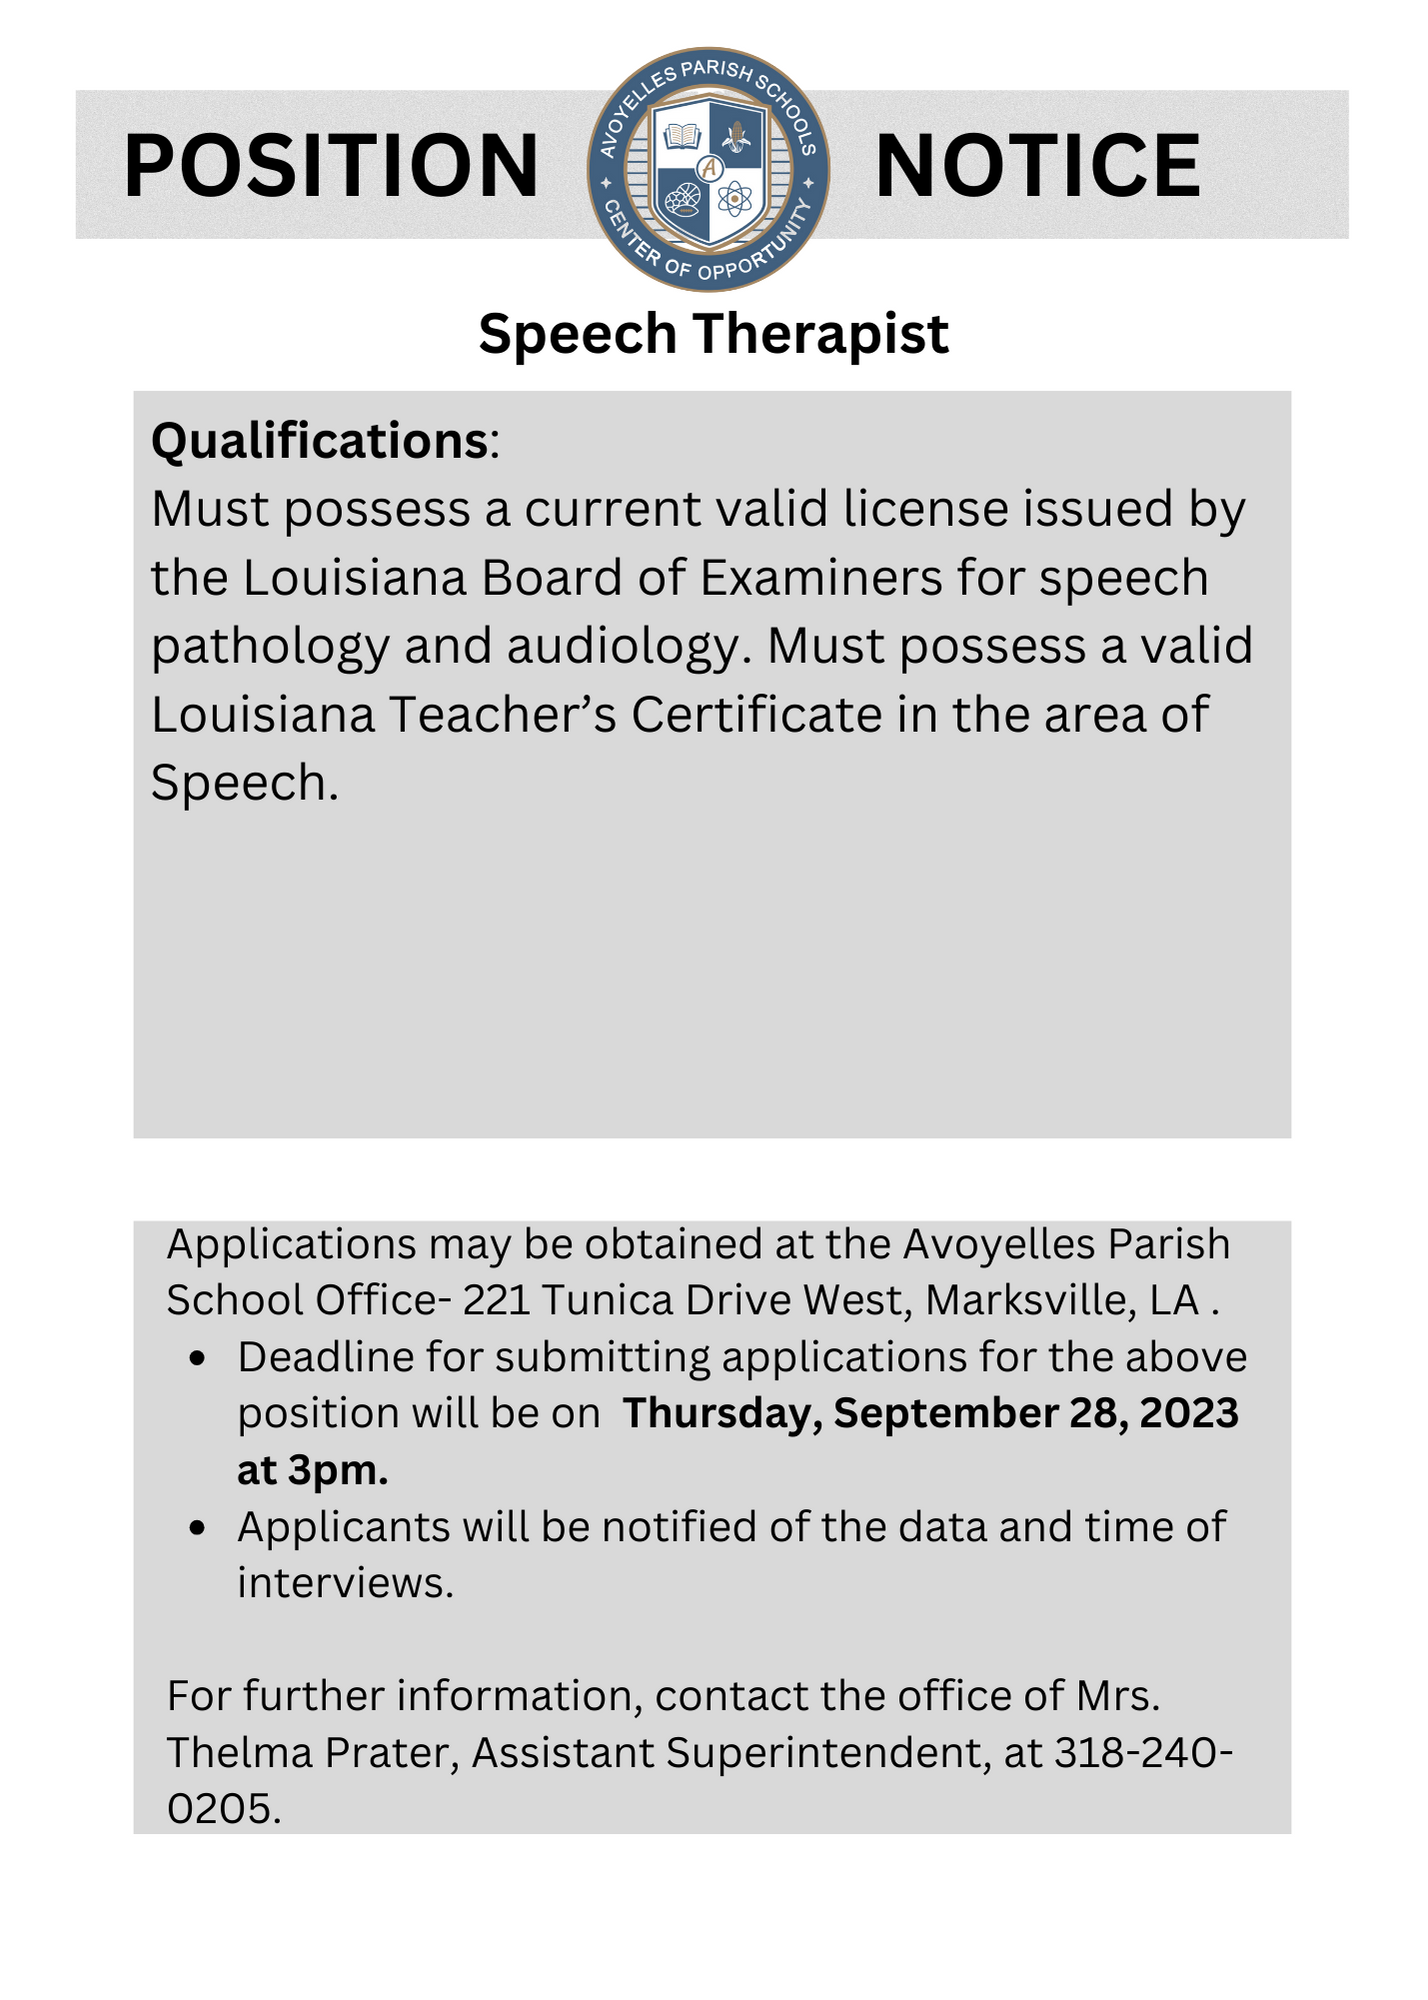 Speech Therapist Job Vacancy